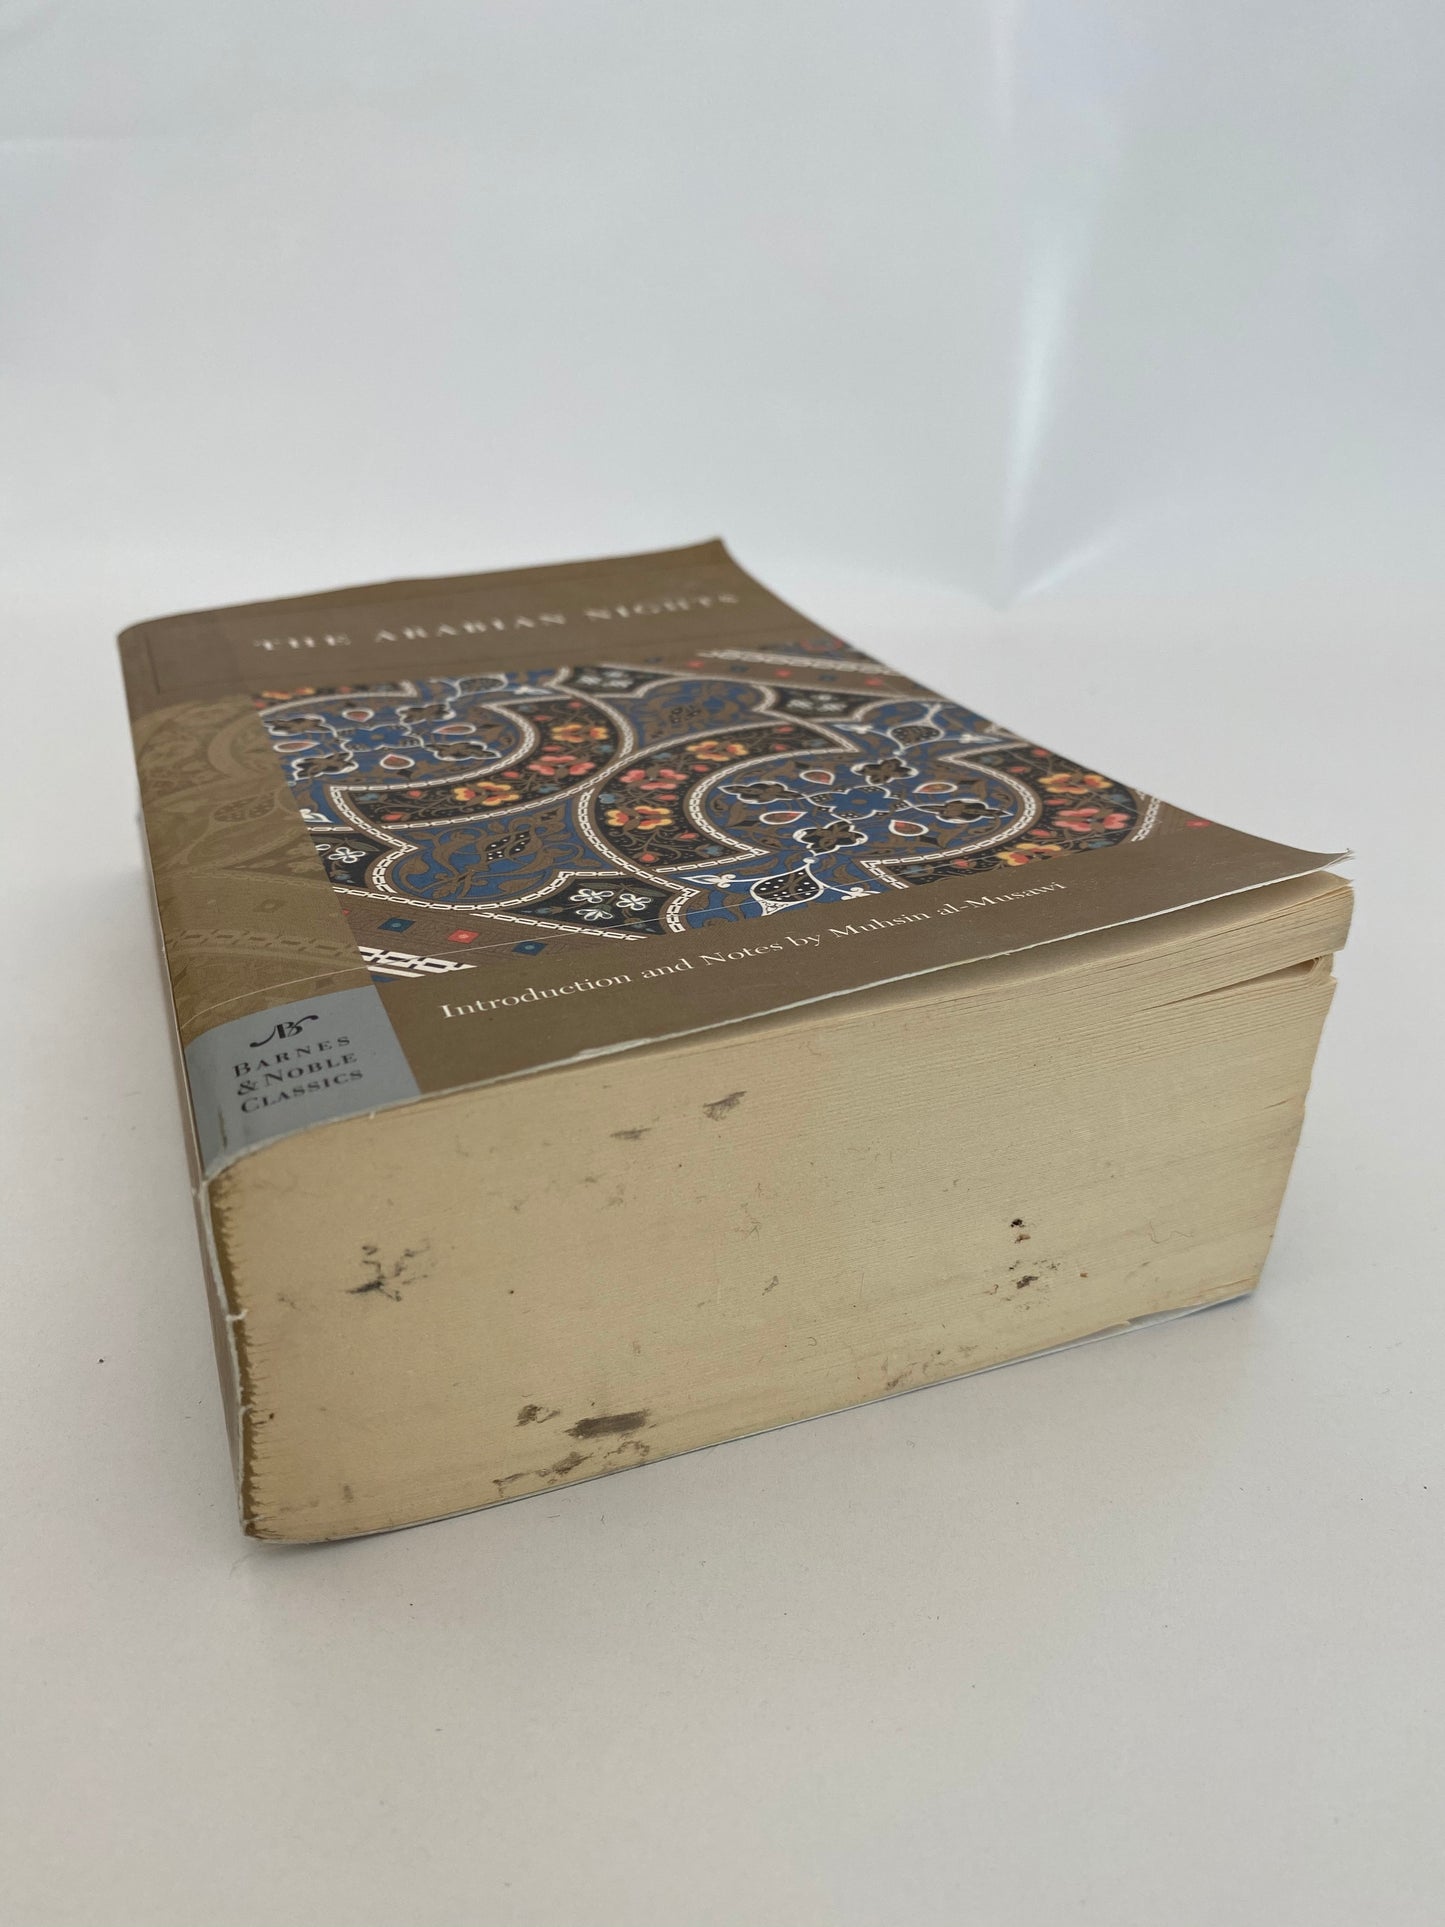 The Arabian Nights Paperback Book